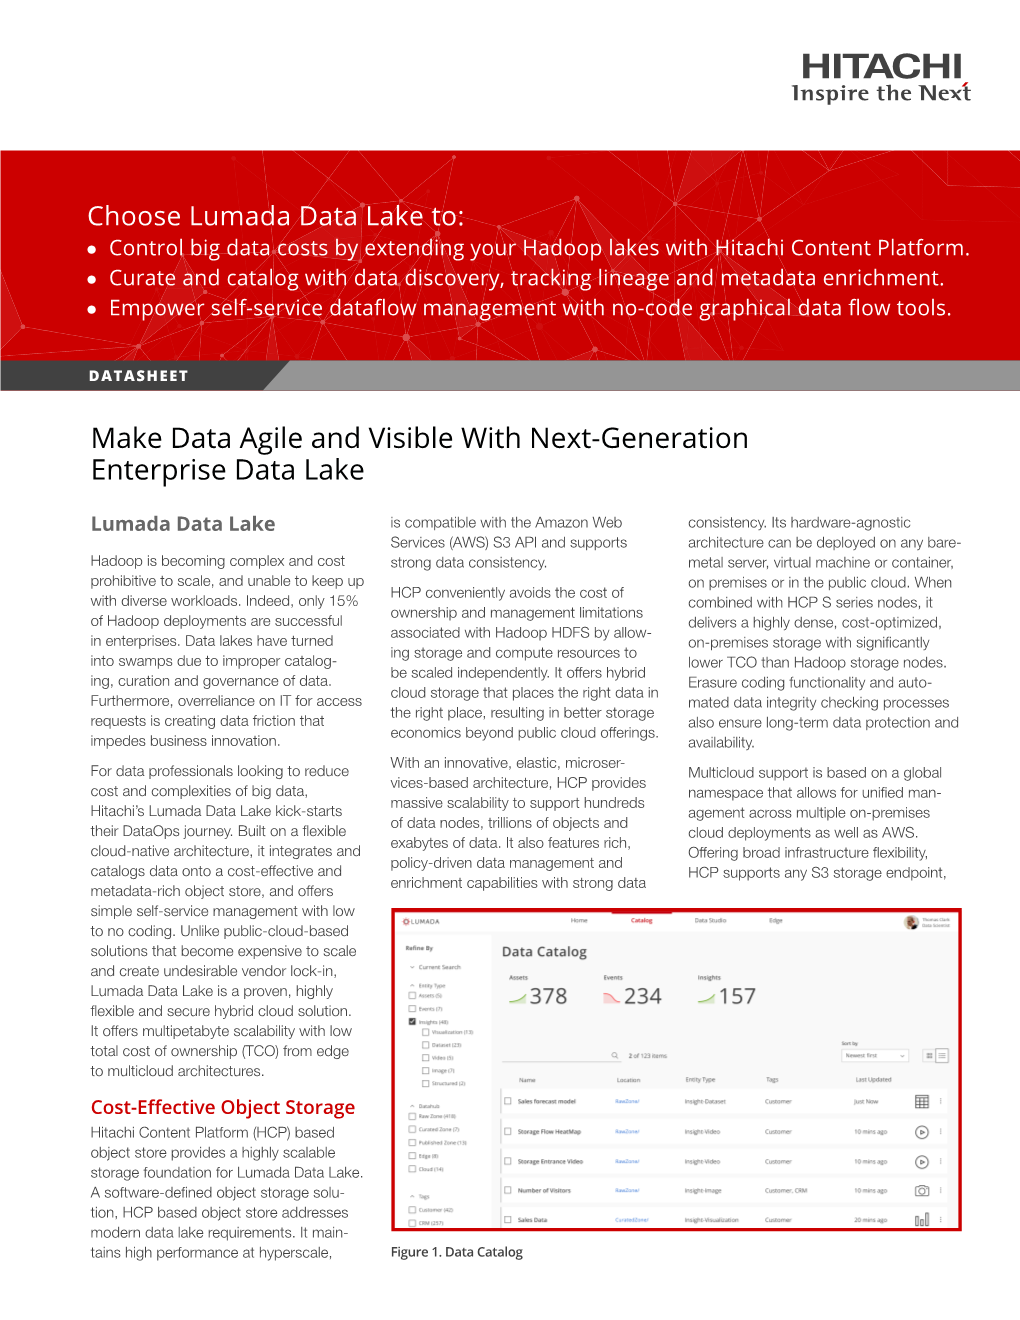 Next Generation Enterprise Lumada Data Lake